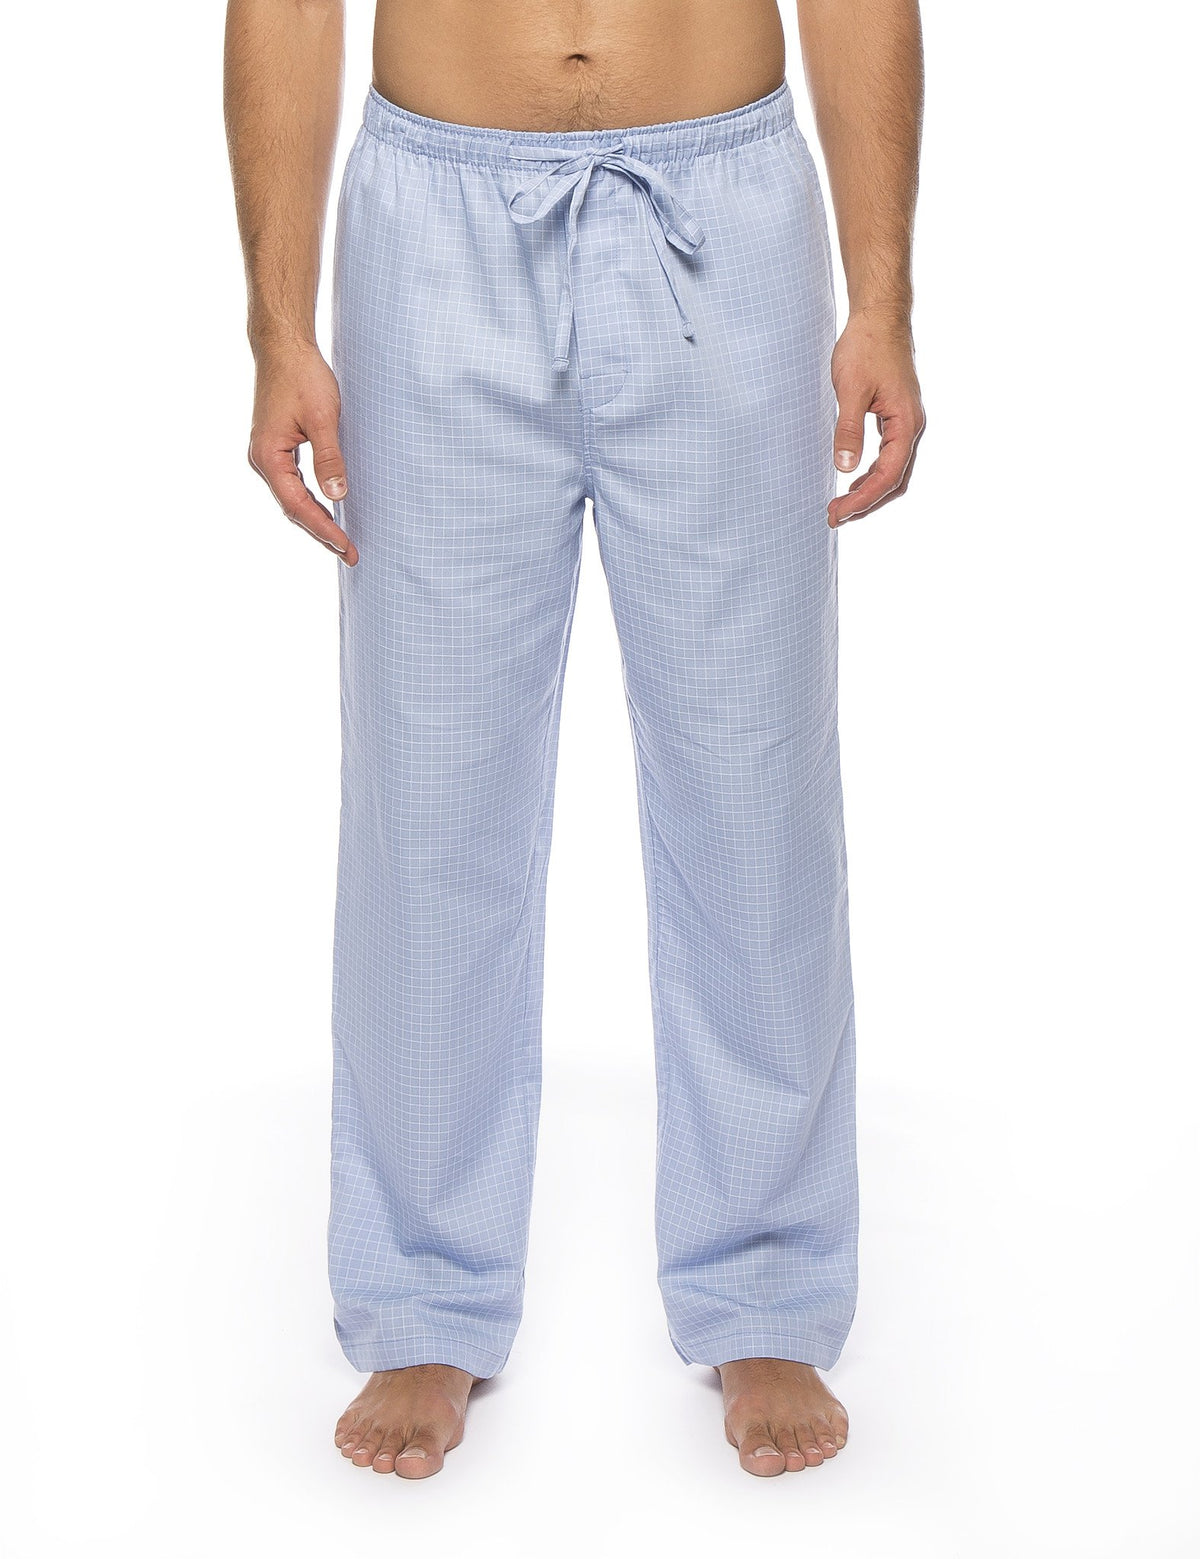 Men's 100% Woven Cotton Lounge Pants - Micro Checks Light Blue